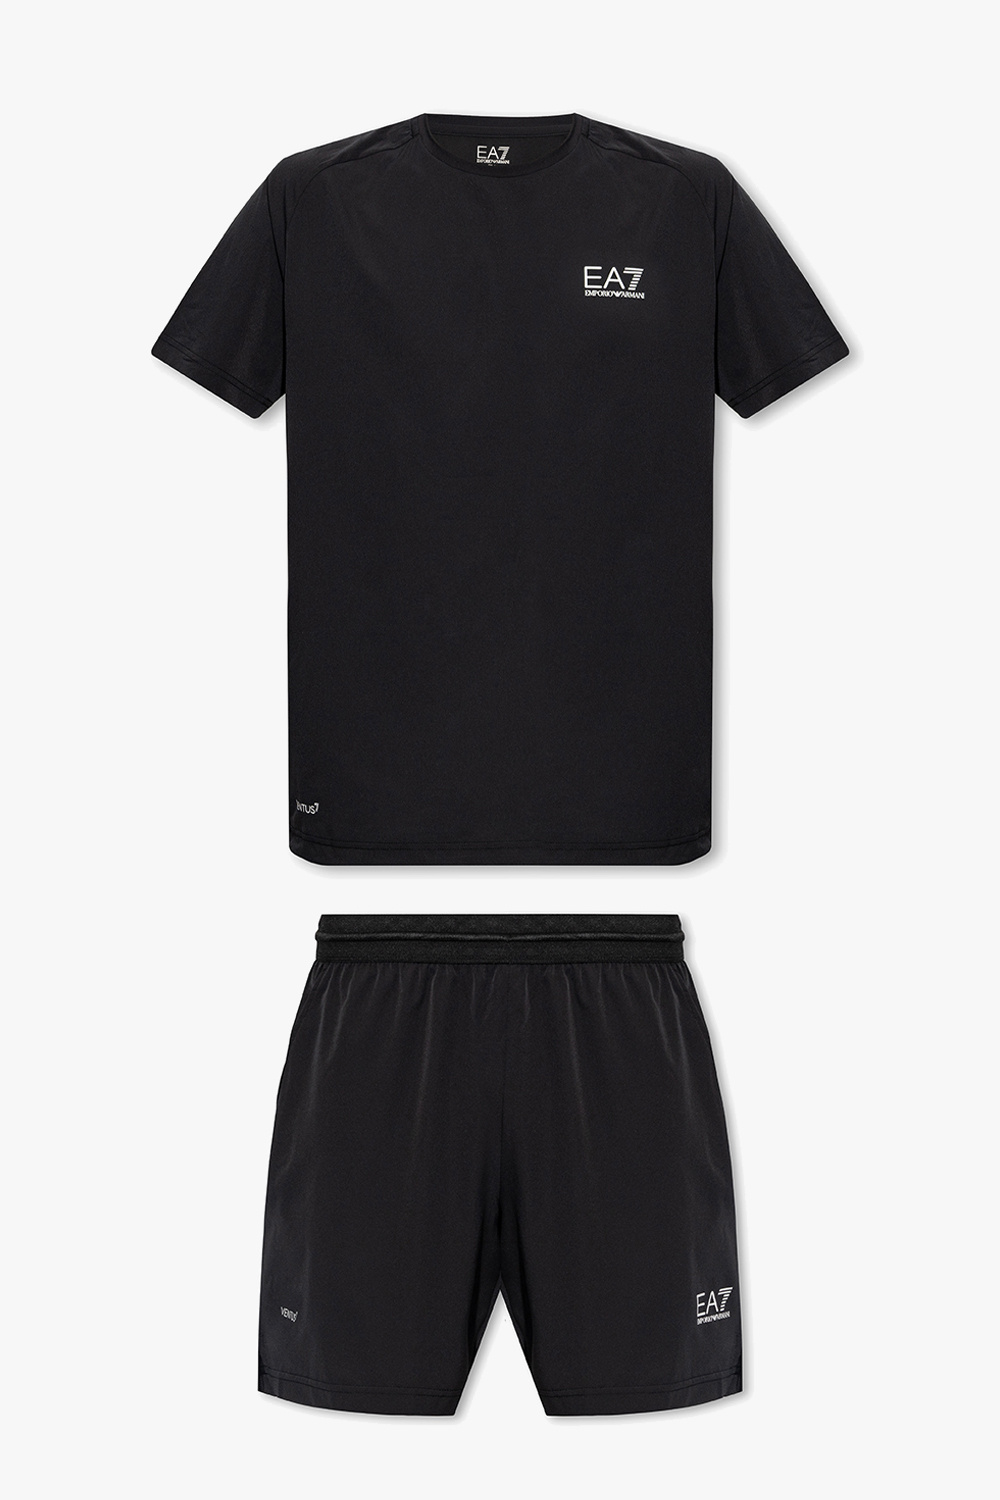 EA7 Emporio Armani Multi Logo Trainers Grey/Navy – Bronx Clothing